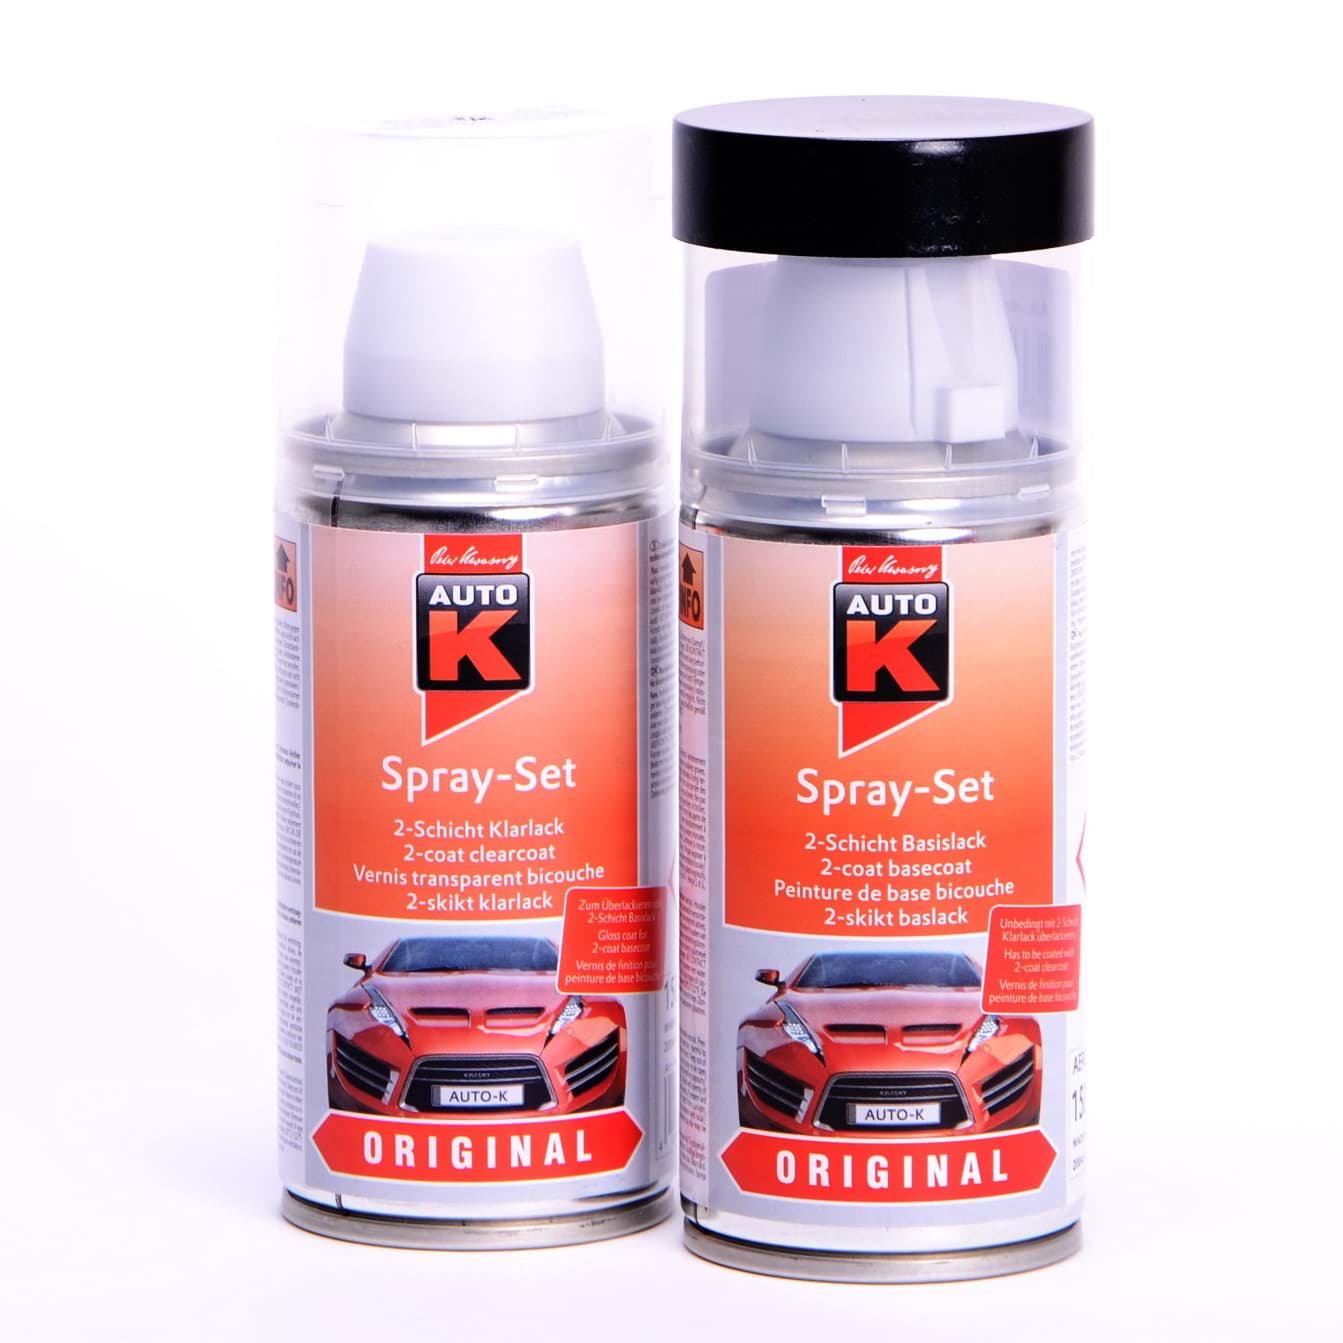 Auto-K Spray-Set Autolack für Peugeot KMF Bleu Recife Nacre met 42370 resmi